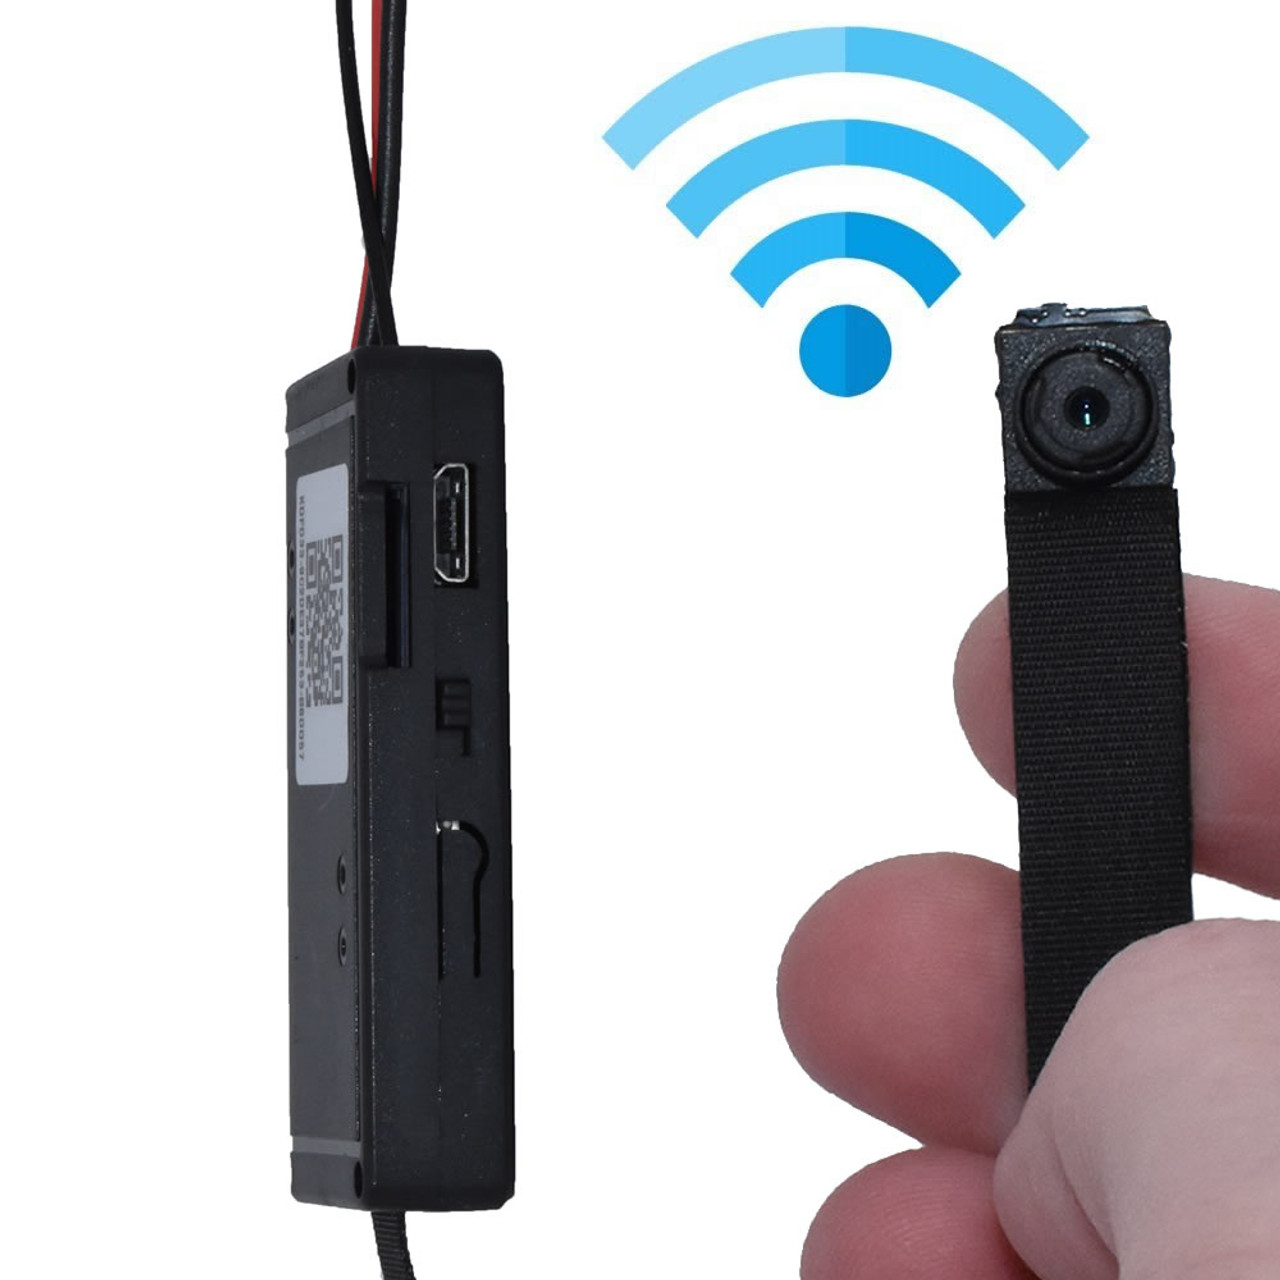 Diy 4k Hidden Camera Kit W Wifi Remote View Spyassociates Com